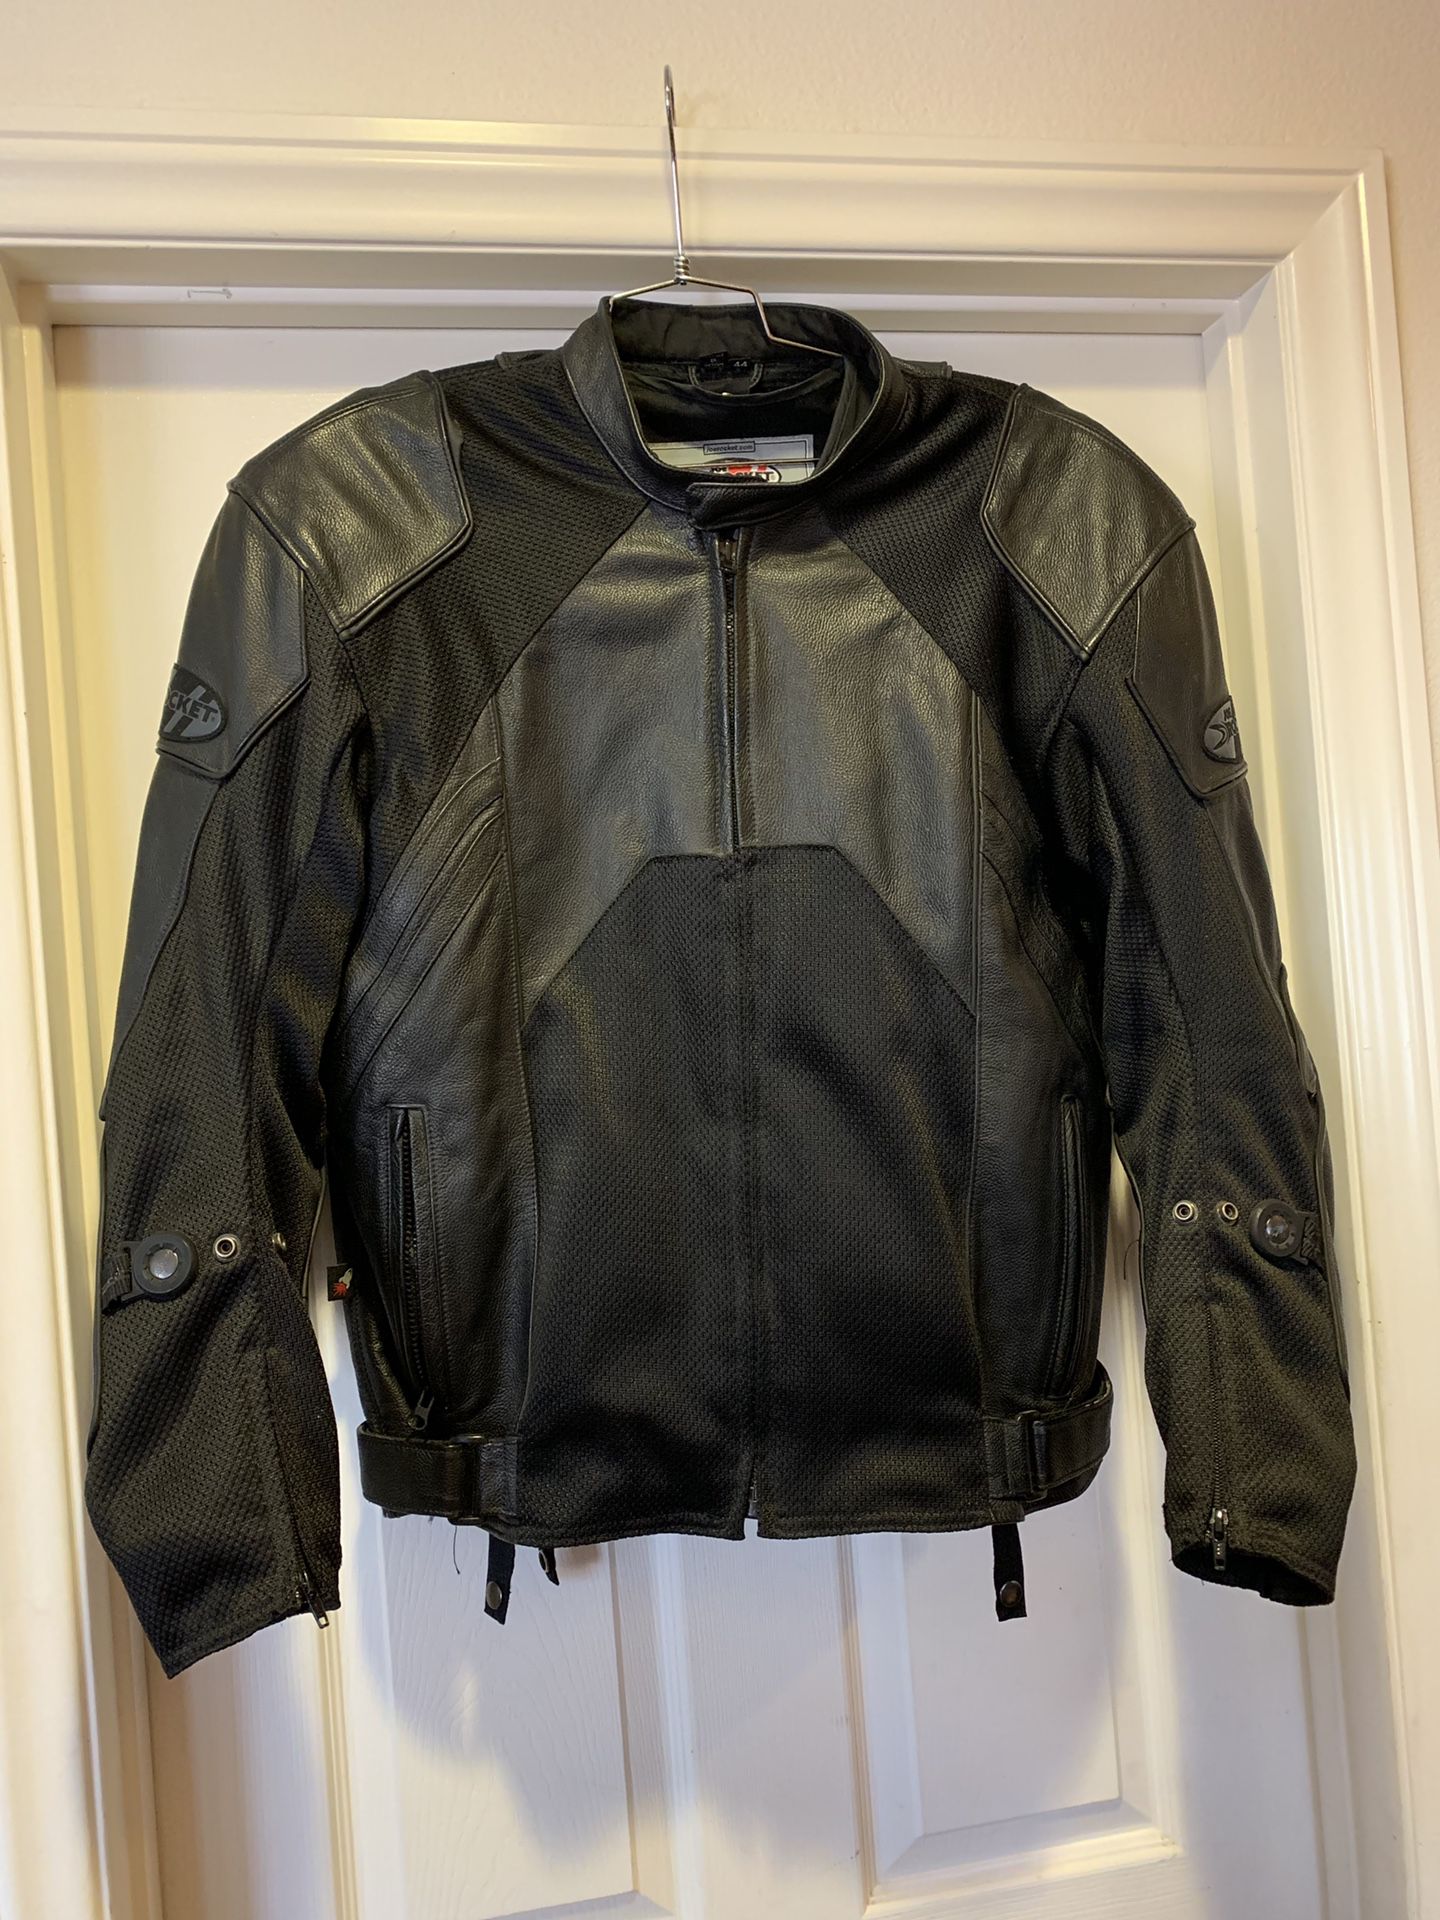 Joe Rocket motorcycle jacket size 44 $60